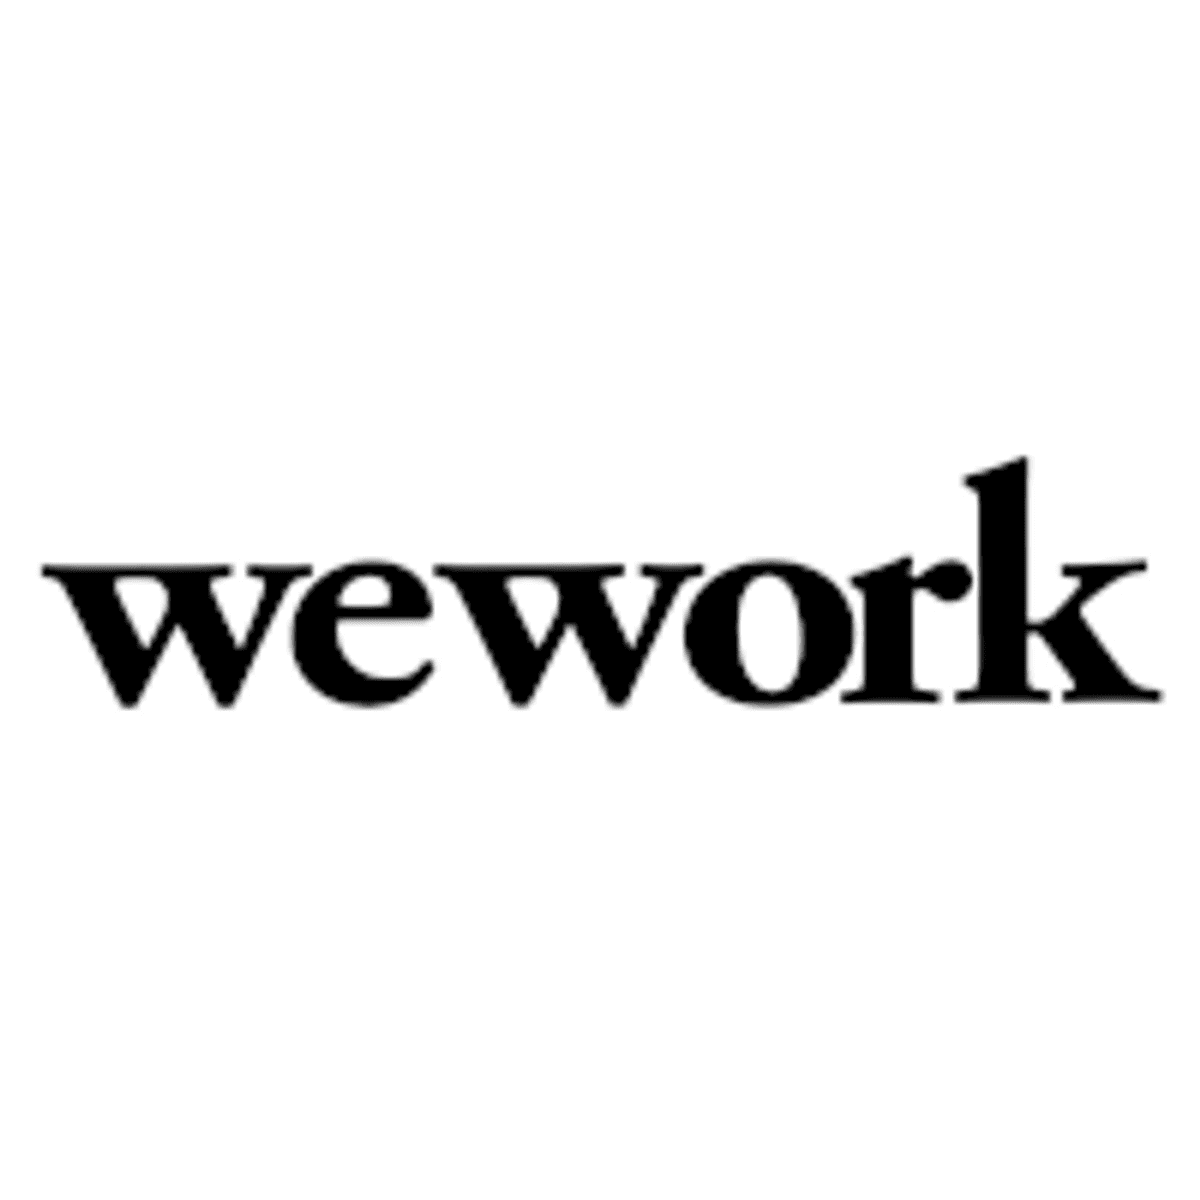 SoftBank steekt miljarden euro's in WeWork image